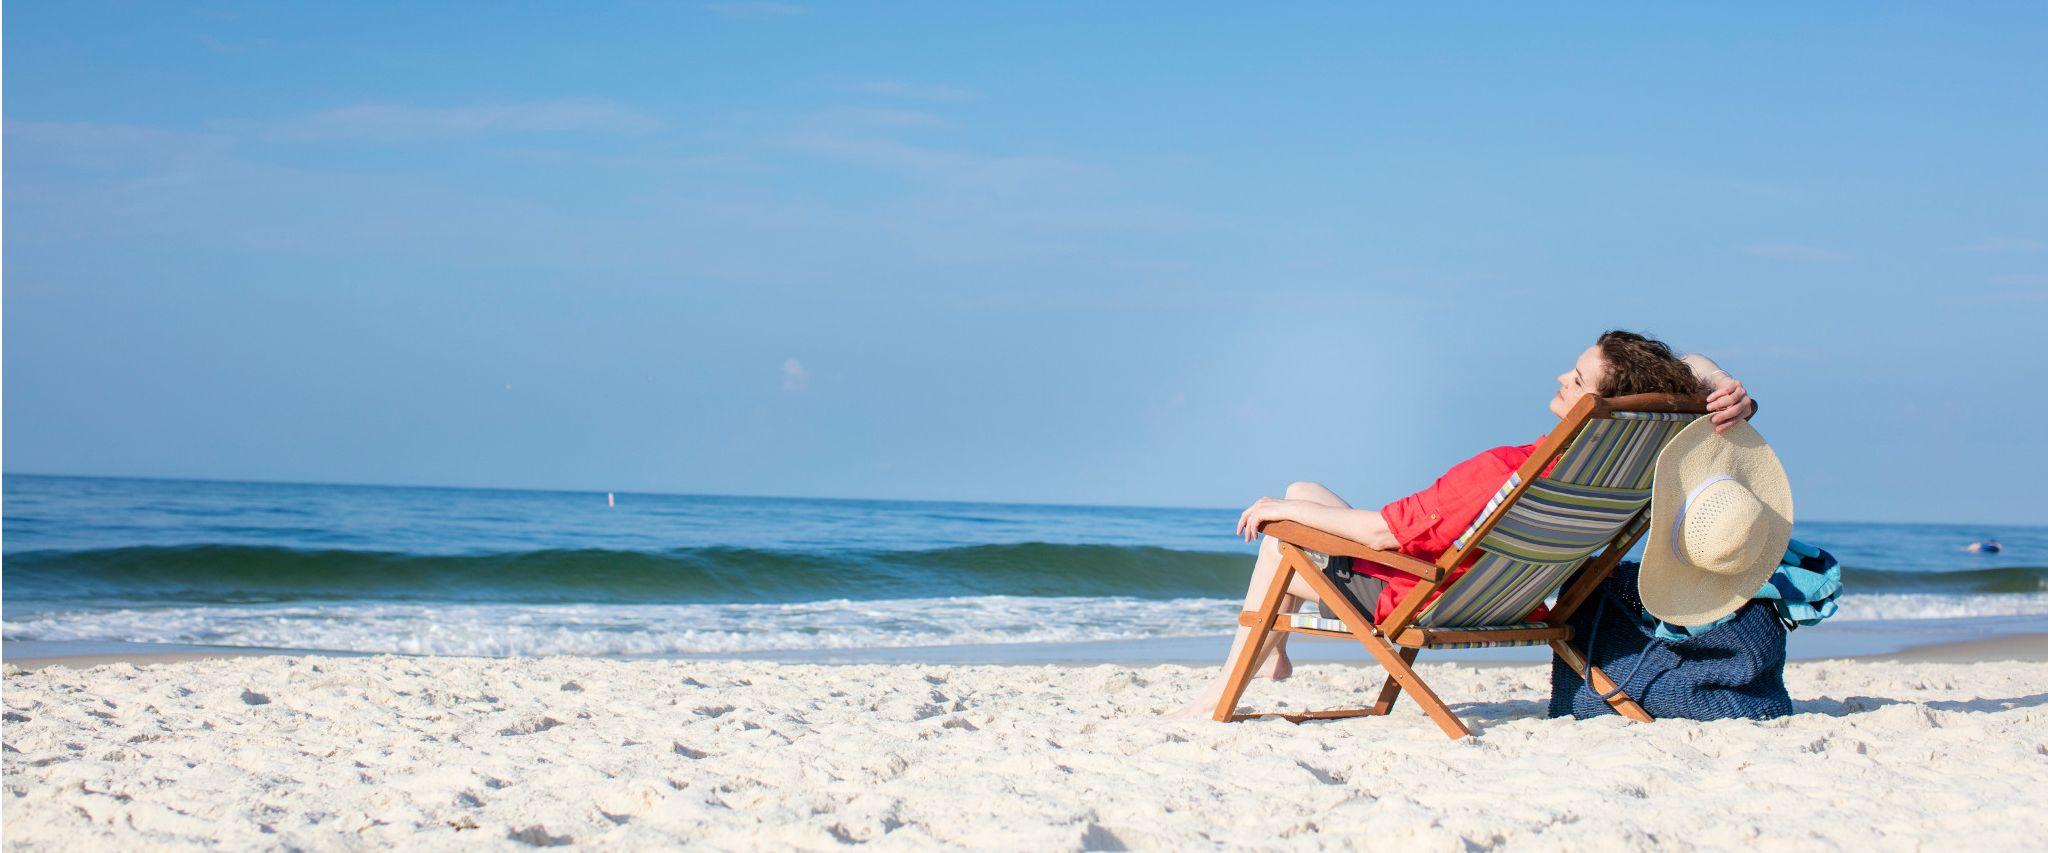 The 11 Best Beaches In Alabama 2020 Gulf Shores Orange Beach